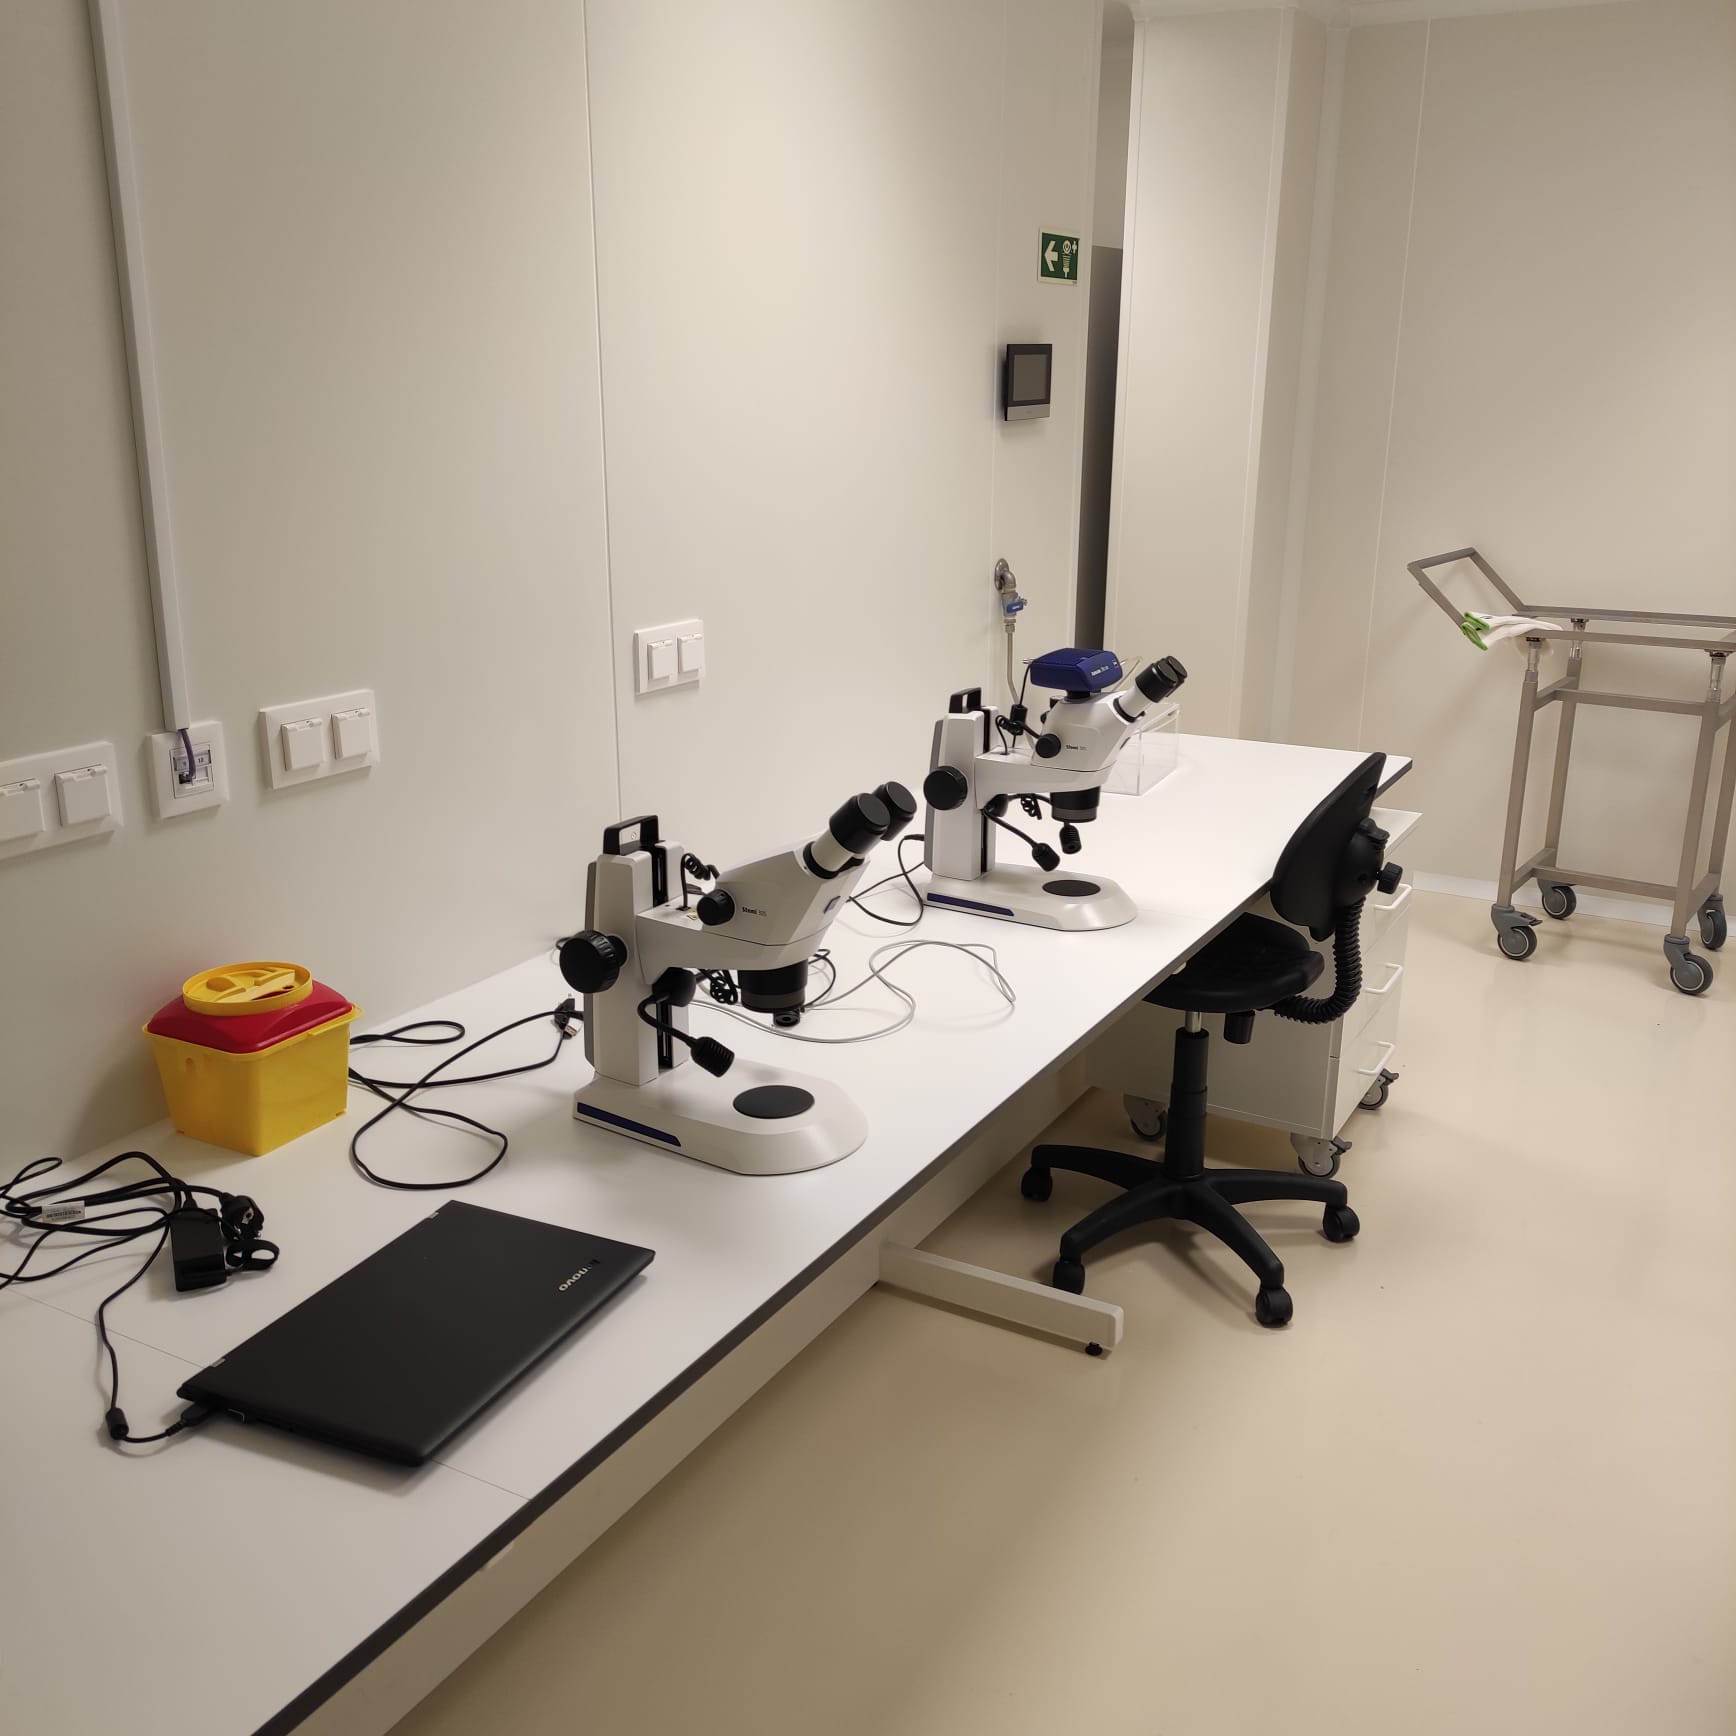 Laboratory Image 3